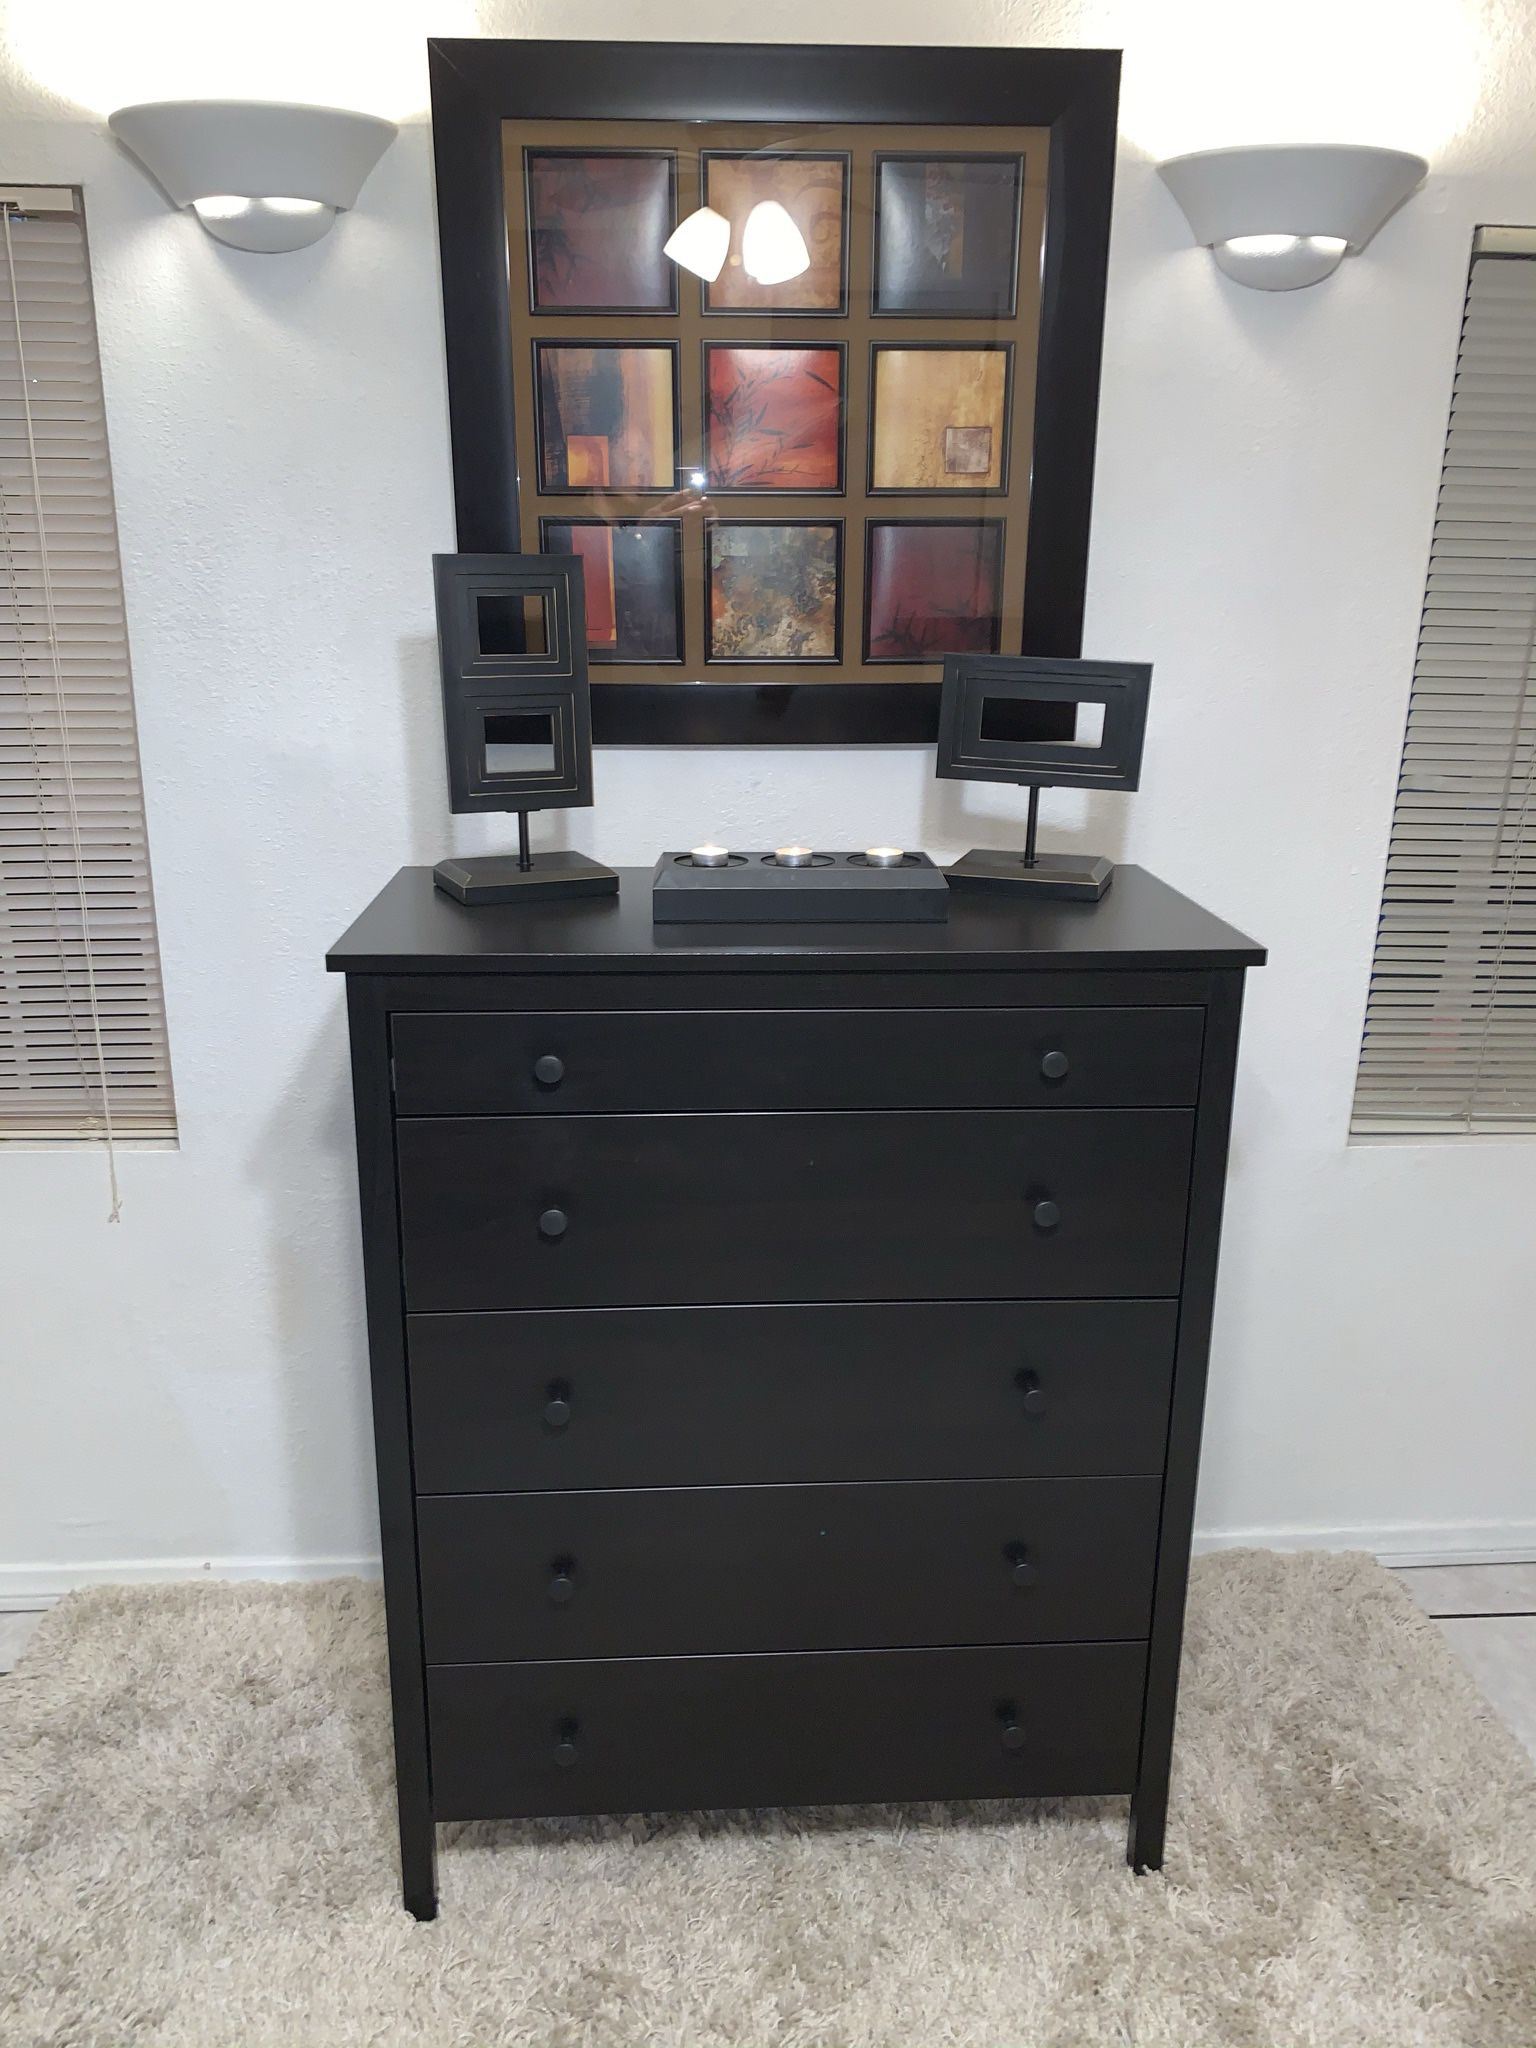 KOPPANG 3-drawer chest, black-brown, 90x83 cm (353/8x325/8) - IKEA CA